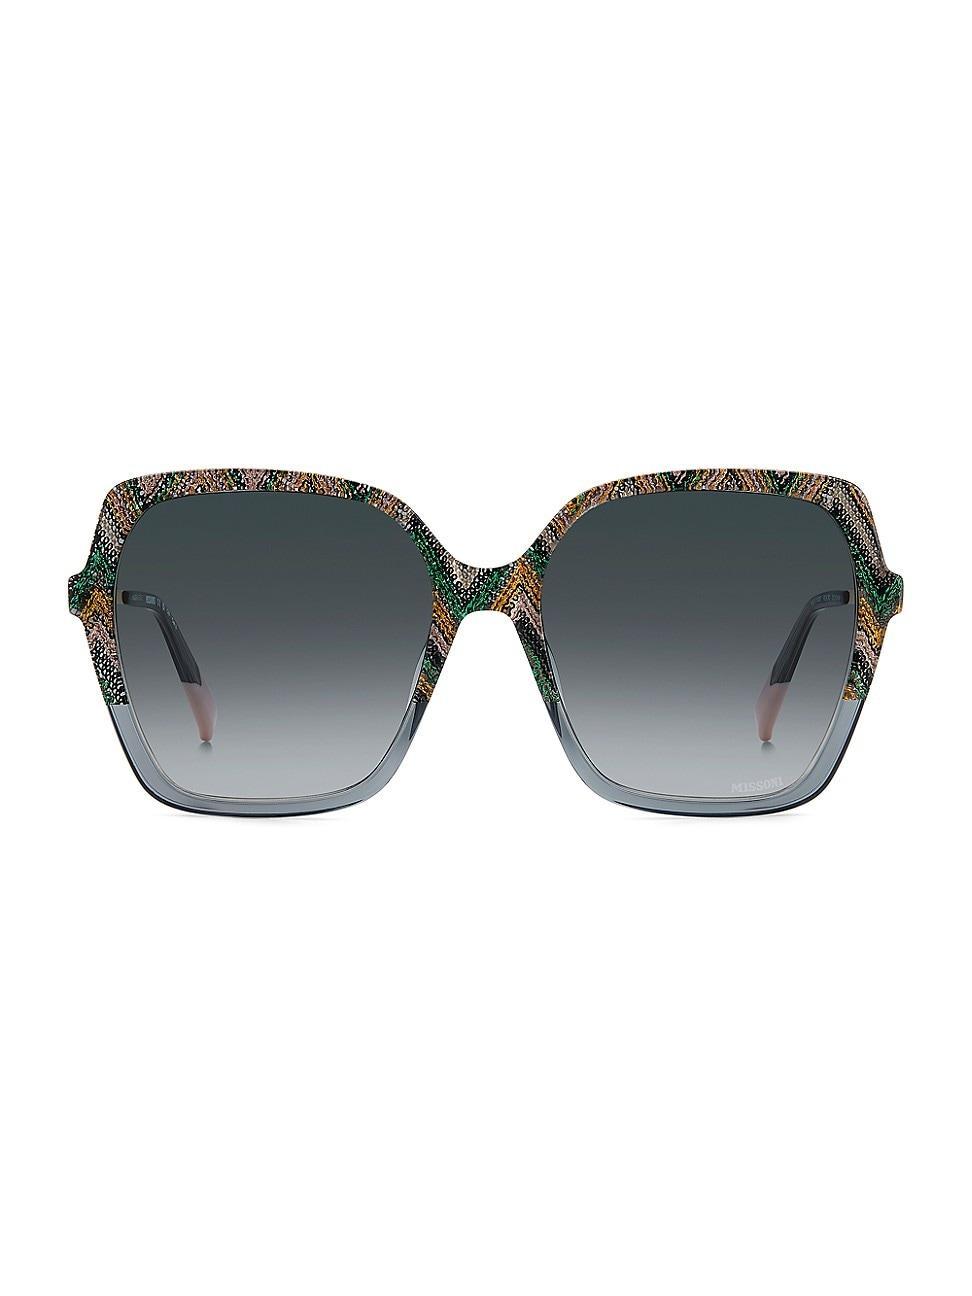 Missoni 57mm Square Sunglasses Product Image